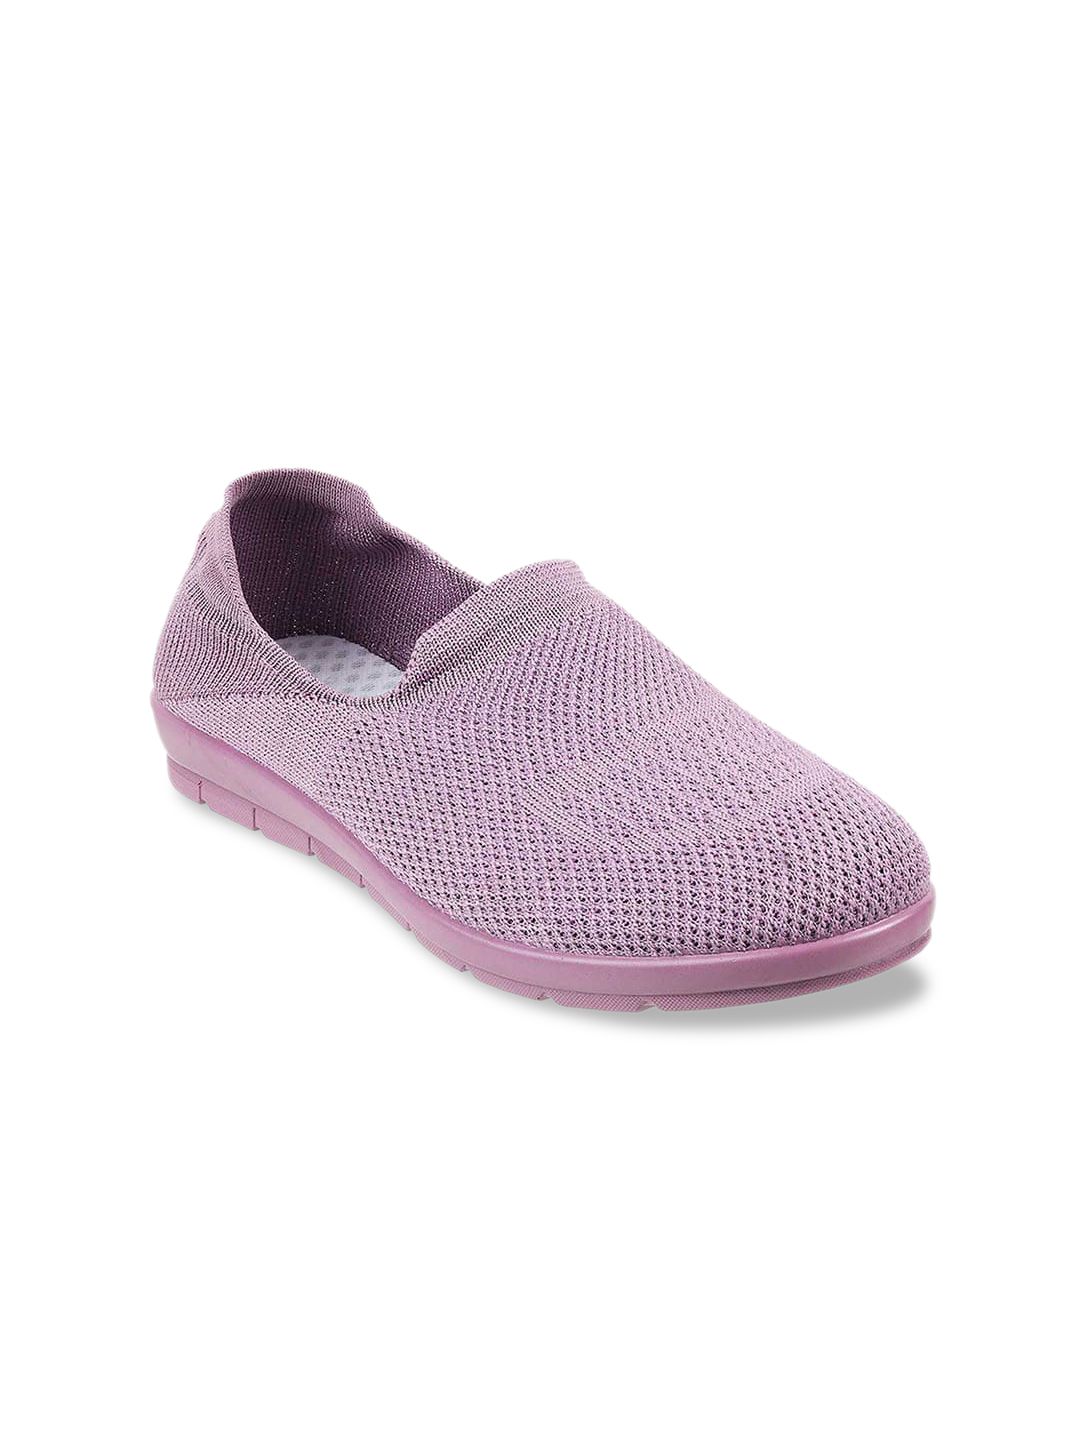 WALKWAY by Metro Women Purple Textured Sneakers shoes Price in India